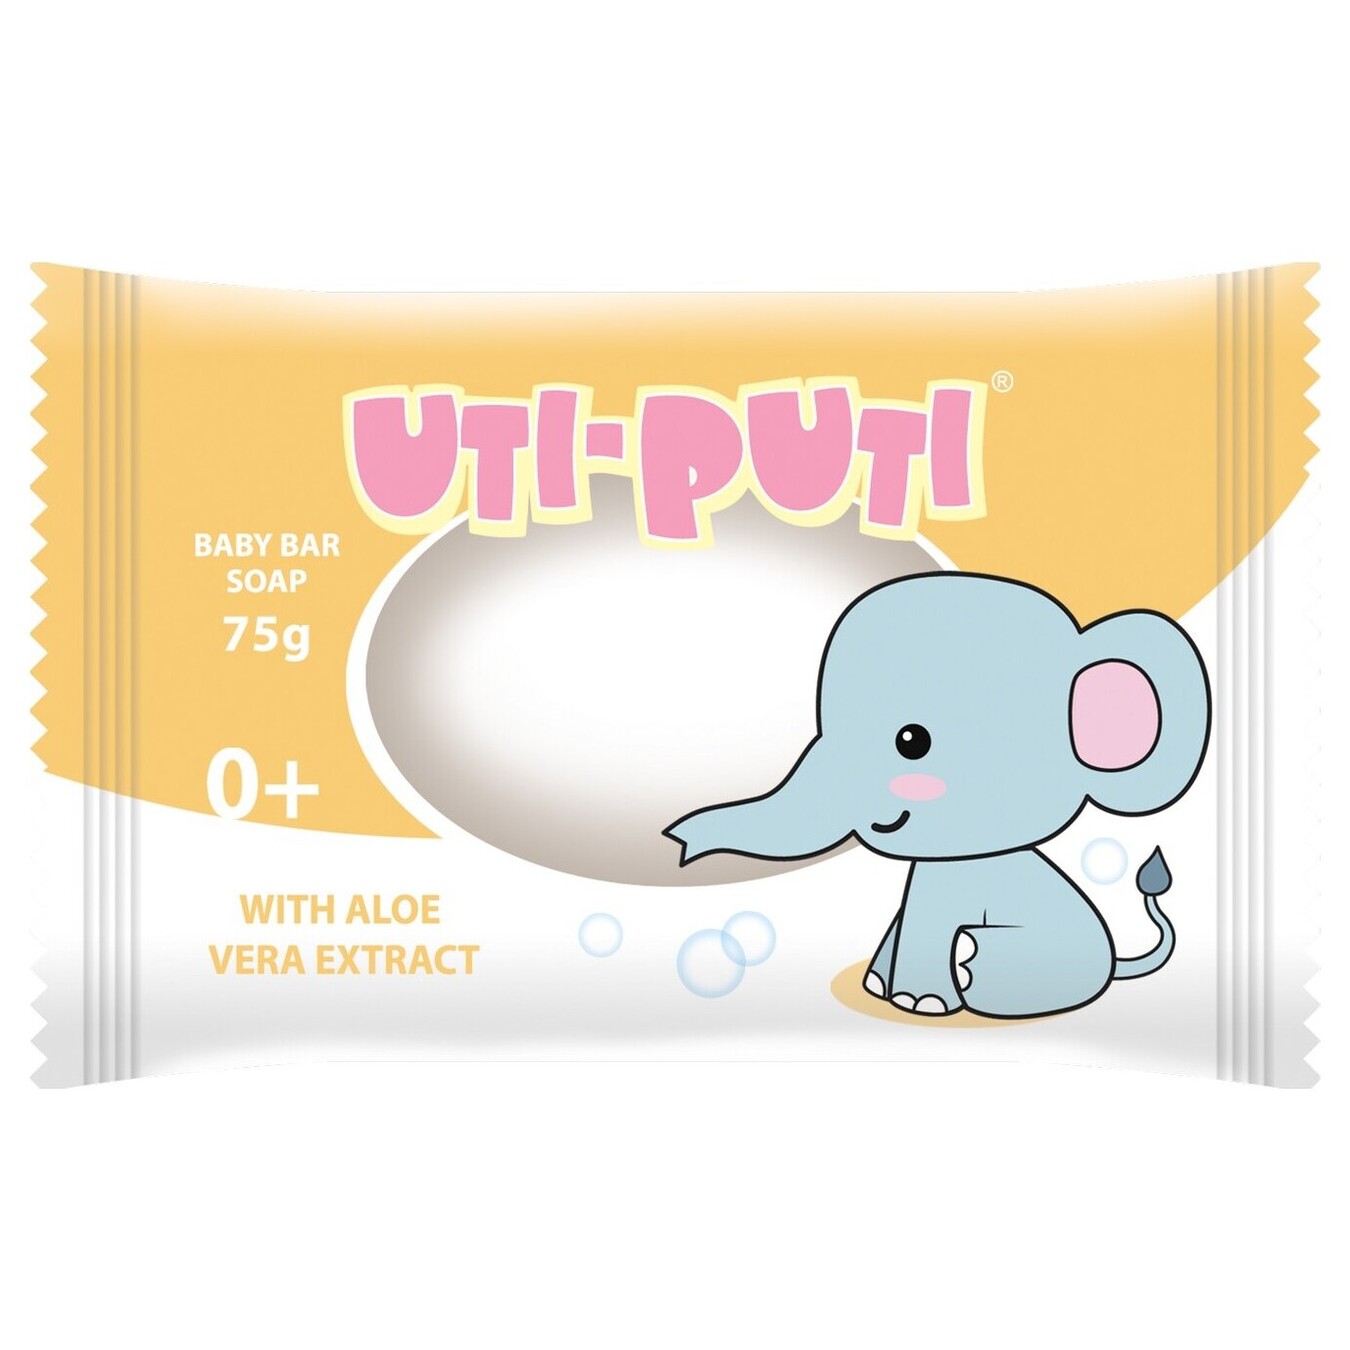 Uti-Puti children's soap with aloe extract 75g